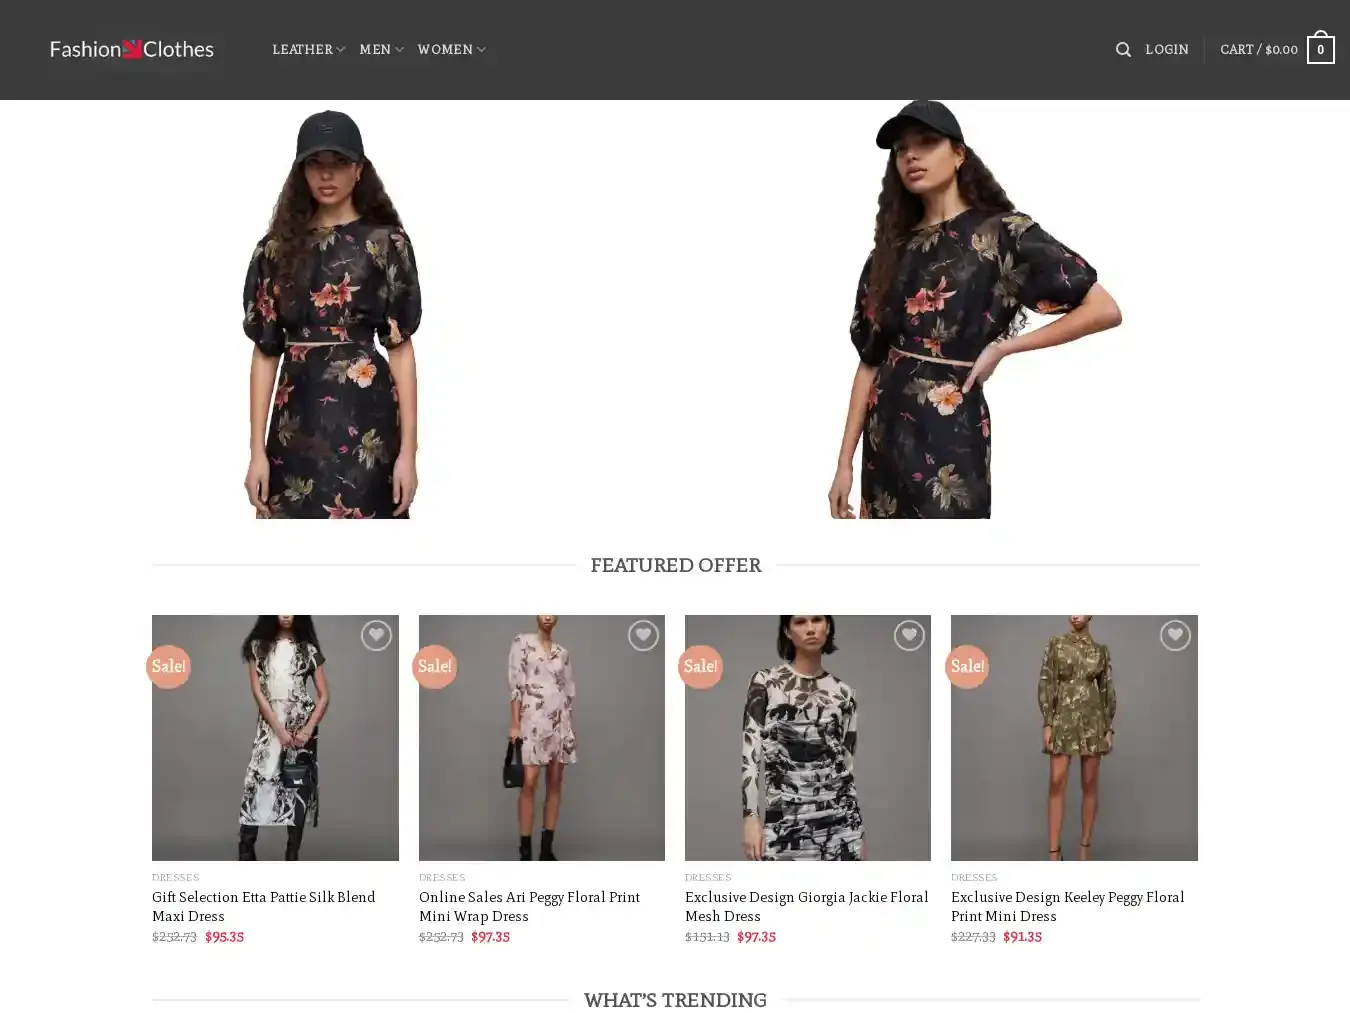 Usplusattire.com Fraudulent Fashion website.